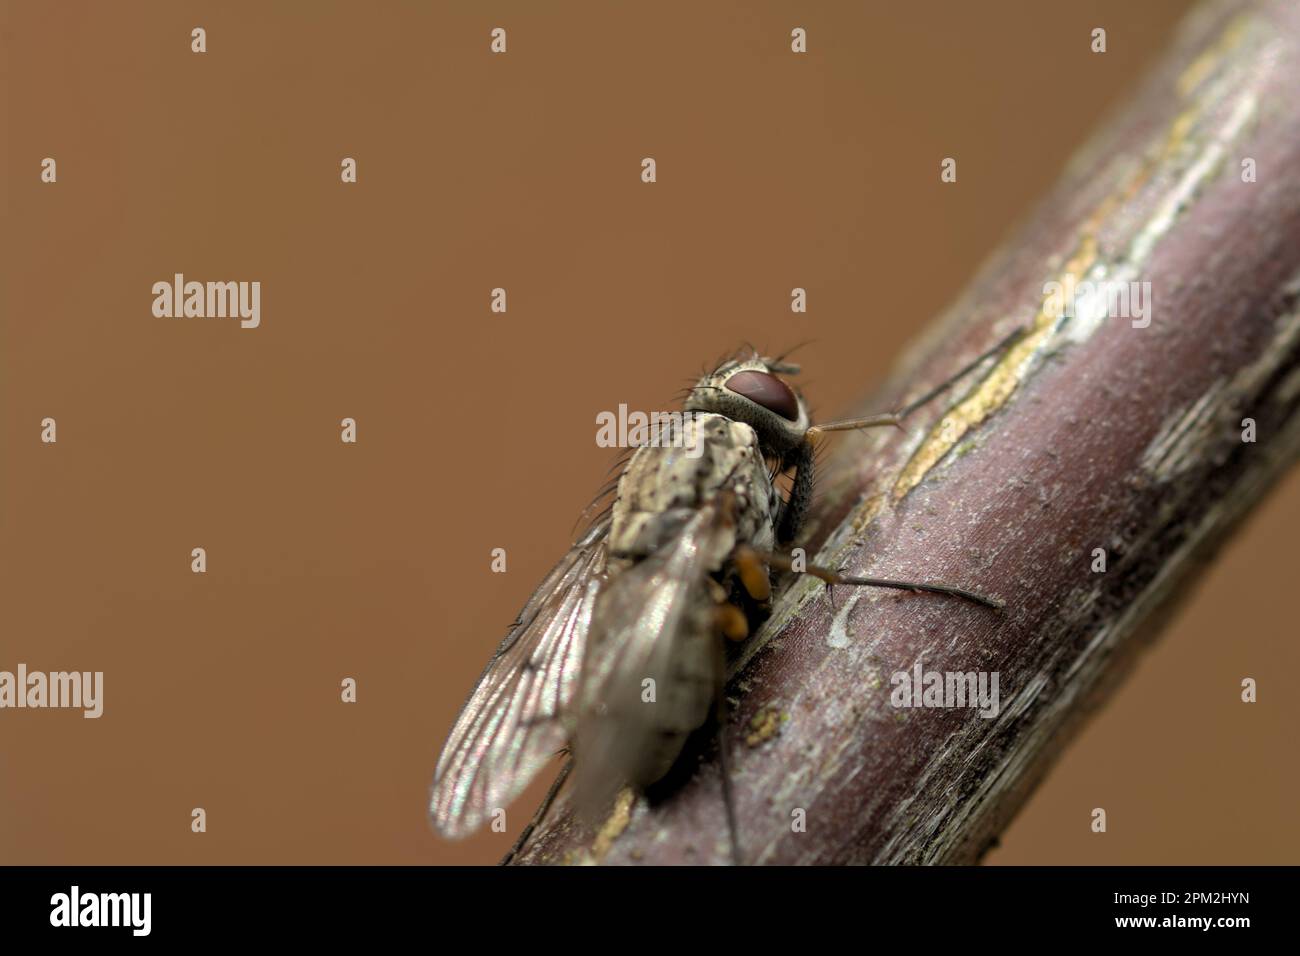 Single fly (Helina cf. depuncta) on a branch, macro insect photography, wildlife Stock Photo